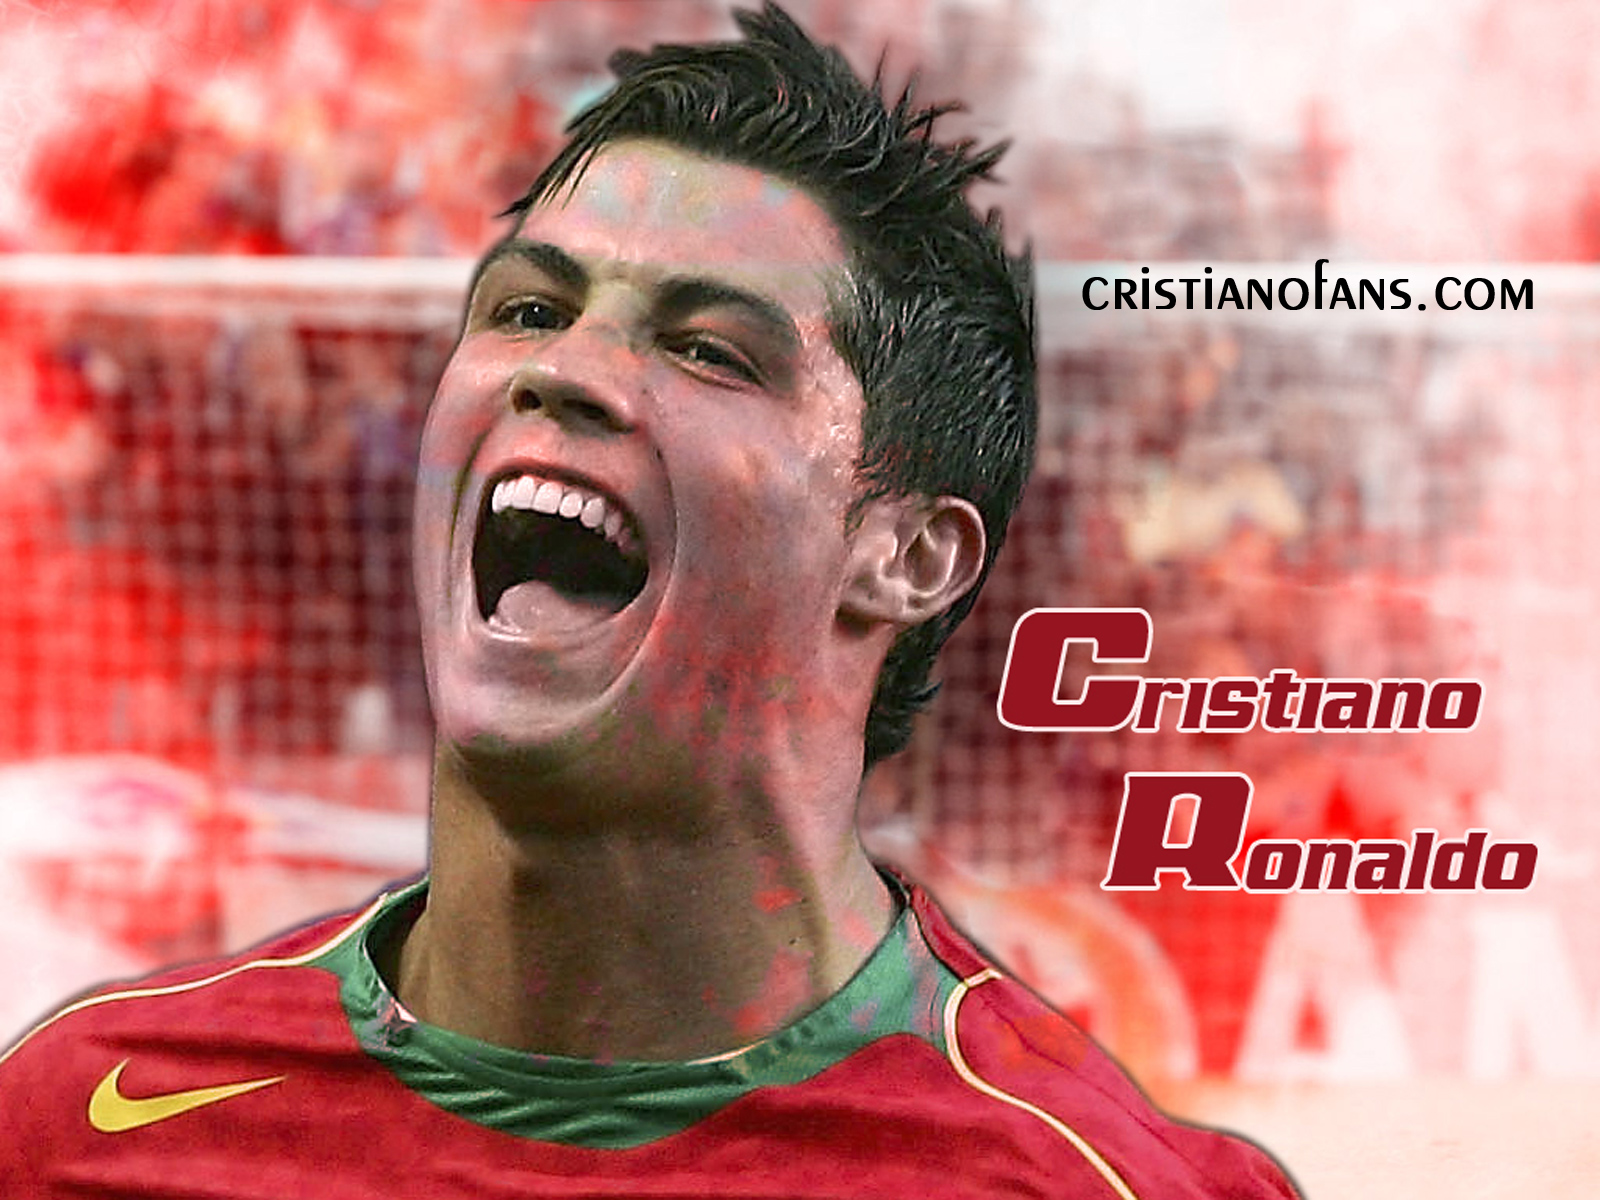 https://blogger.googleusercontent.com/img/b/R29vZ2xl/AVvXsEjxnUVWj0U4hspoy6gbAn6pLooHRlpD6IV2b1iccOOILq24muAIcJk1MqGGOUwQfstForTET38I5MhabJN3Bc3iM9DeIiRN3FyxUkEsU1xZ6pg6TJfjzFD40uMAQ_TlD3EfF2vfJivNsuI/s1600/Cristiano-Ronaldo-Hot-Wallpapers-3.jpg